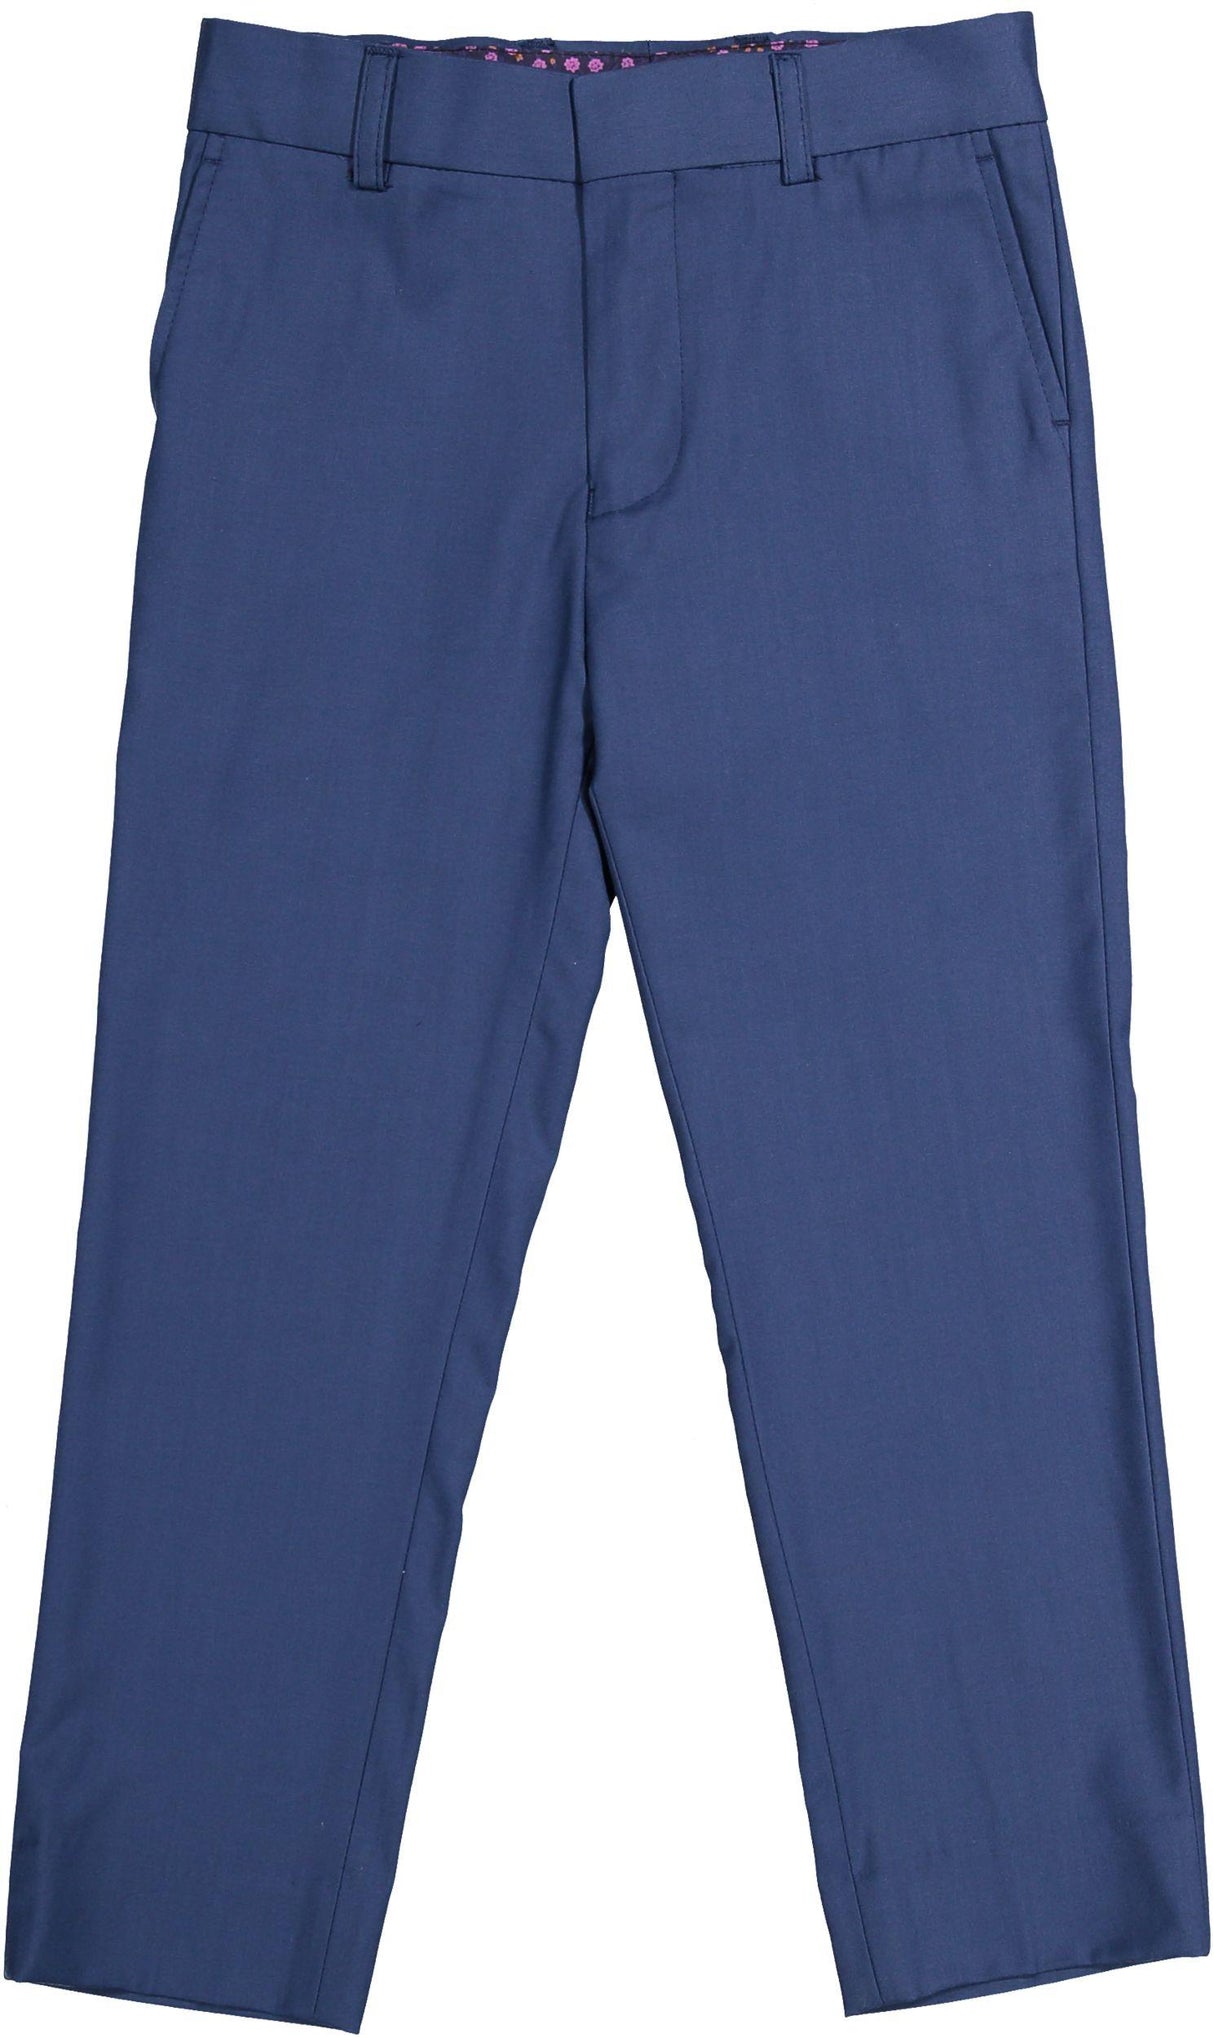 T.O. Collection Boys Flat Front Dress Pants (Slim, Regular